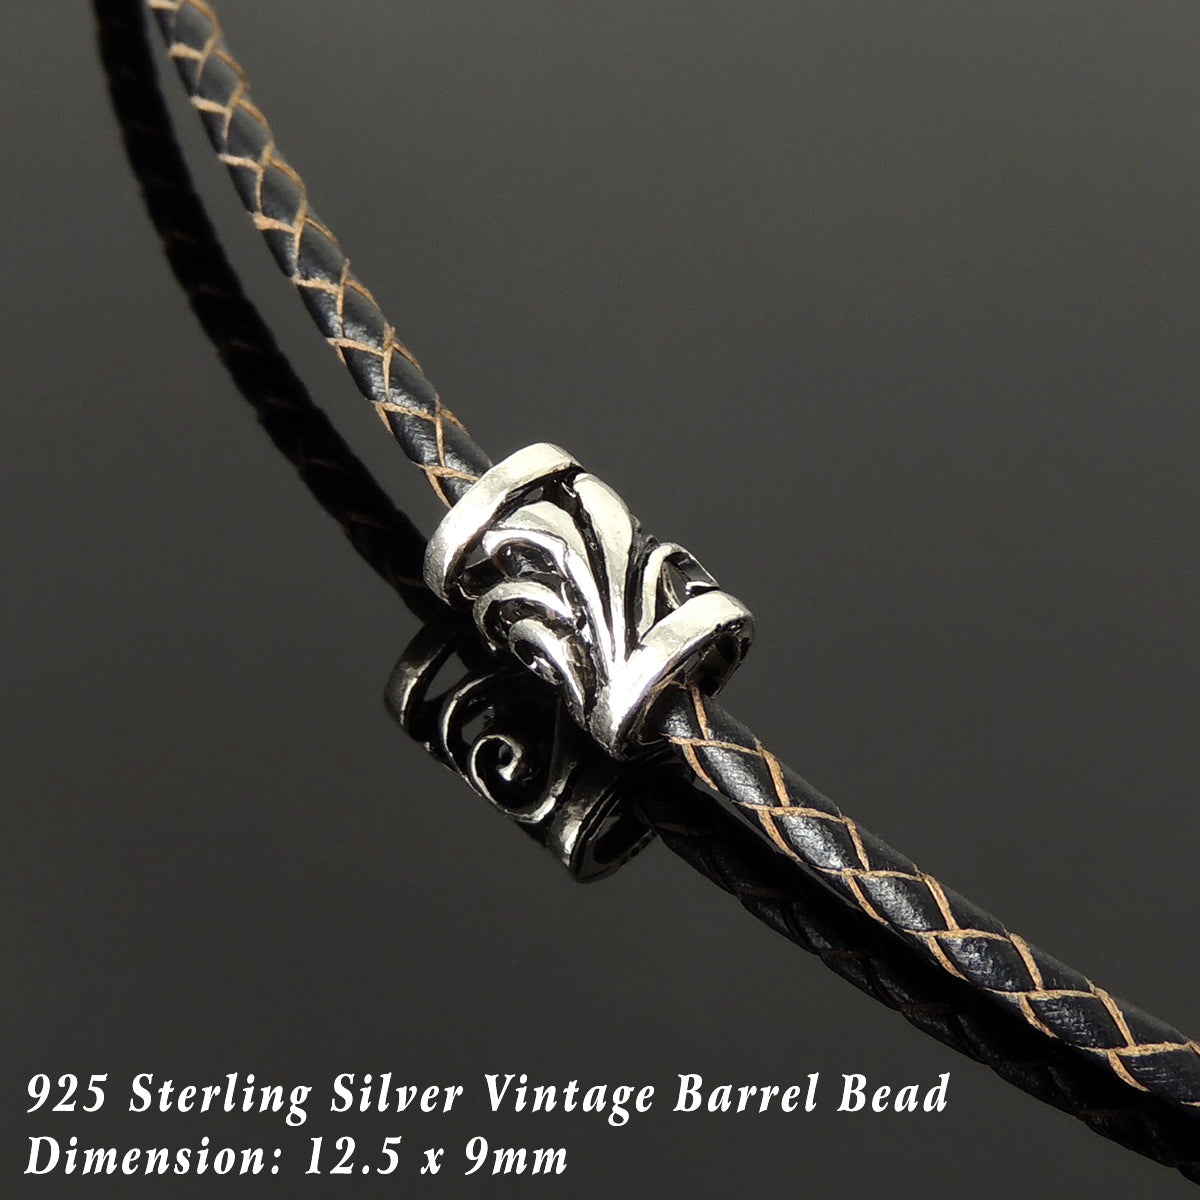 Vintage handmade Sterling Silver Chain & Bead Bracelet